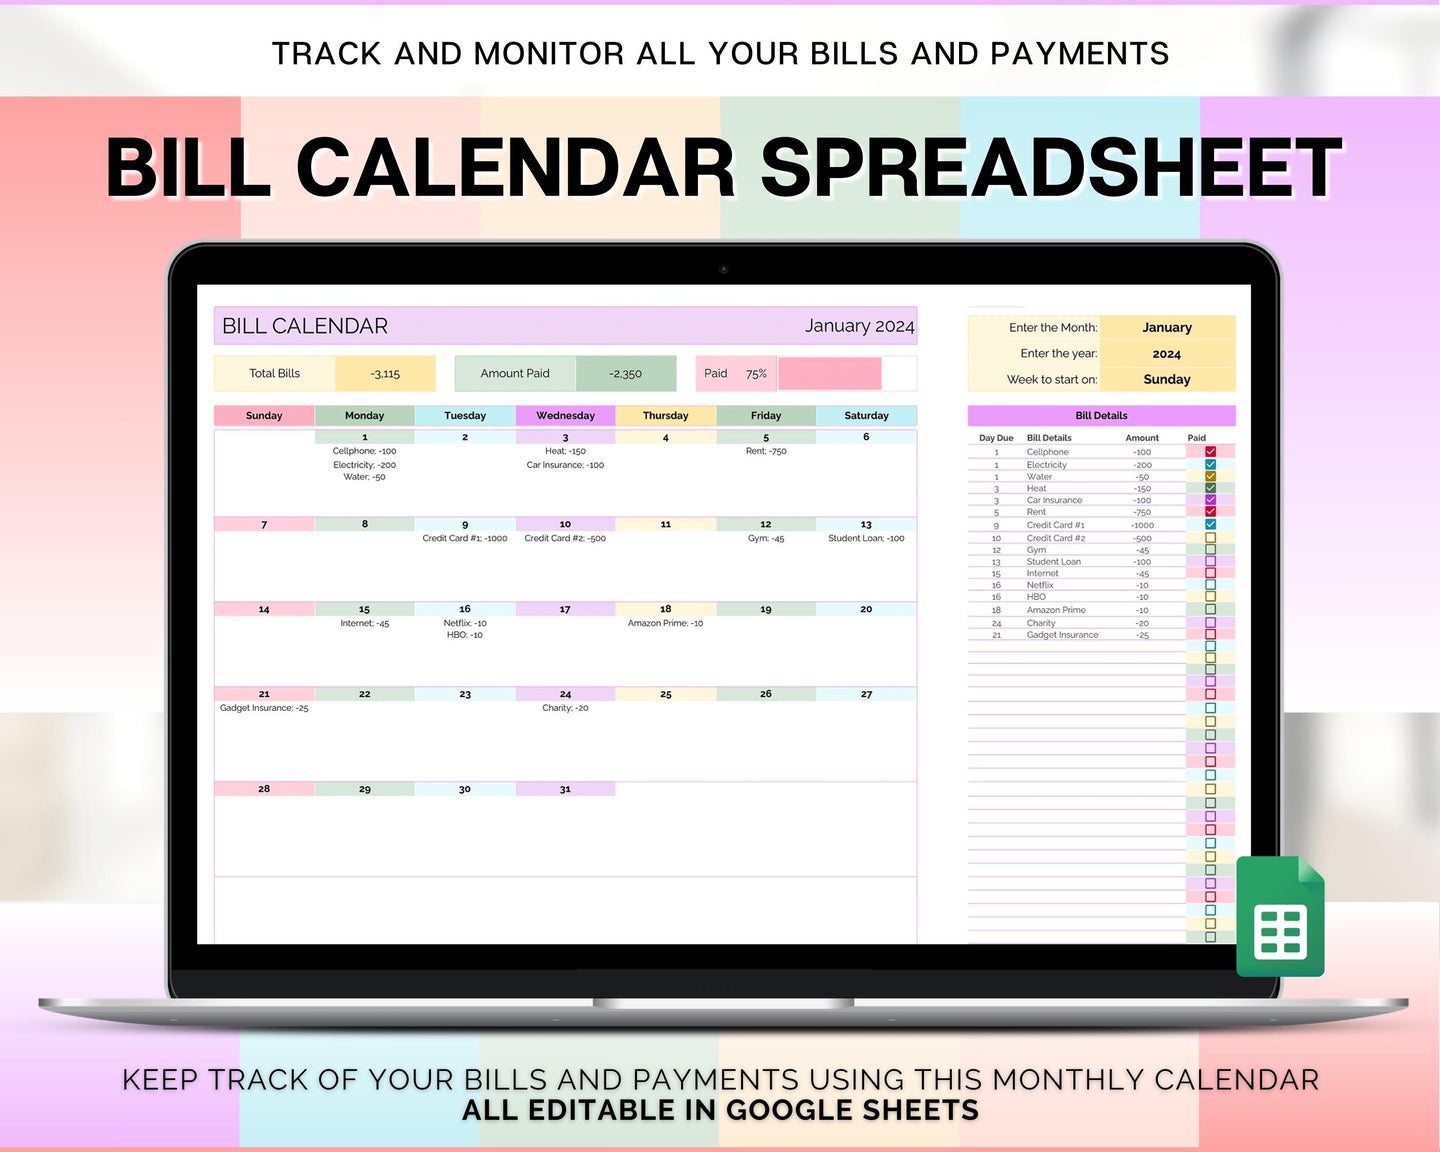 Bill Payment Calendar Spreadsheet | Google SHEETS Automated Monthly Bill Tracker | Budget Expense, Finance Template | Rainbow